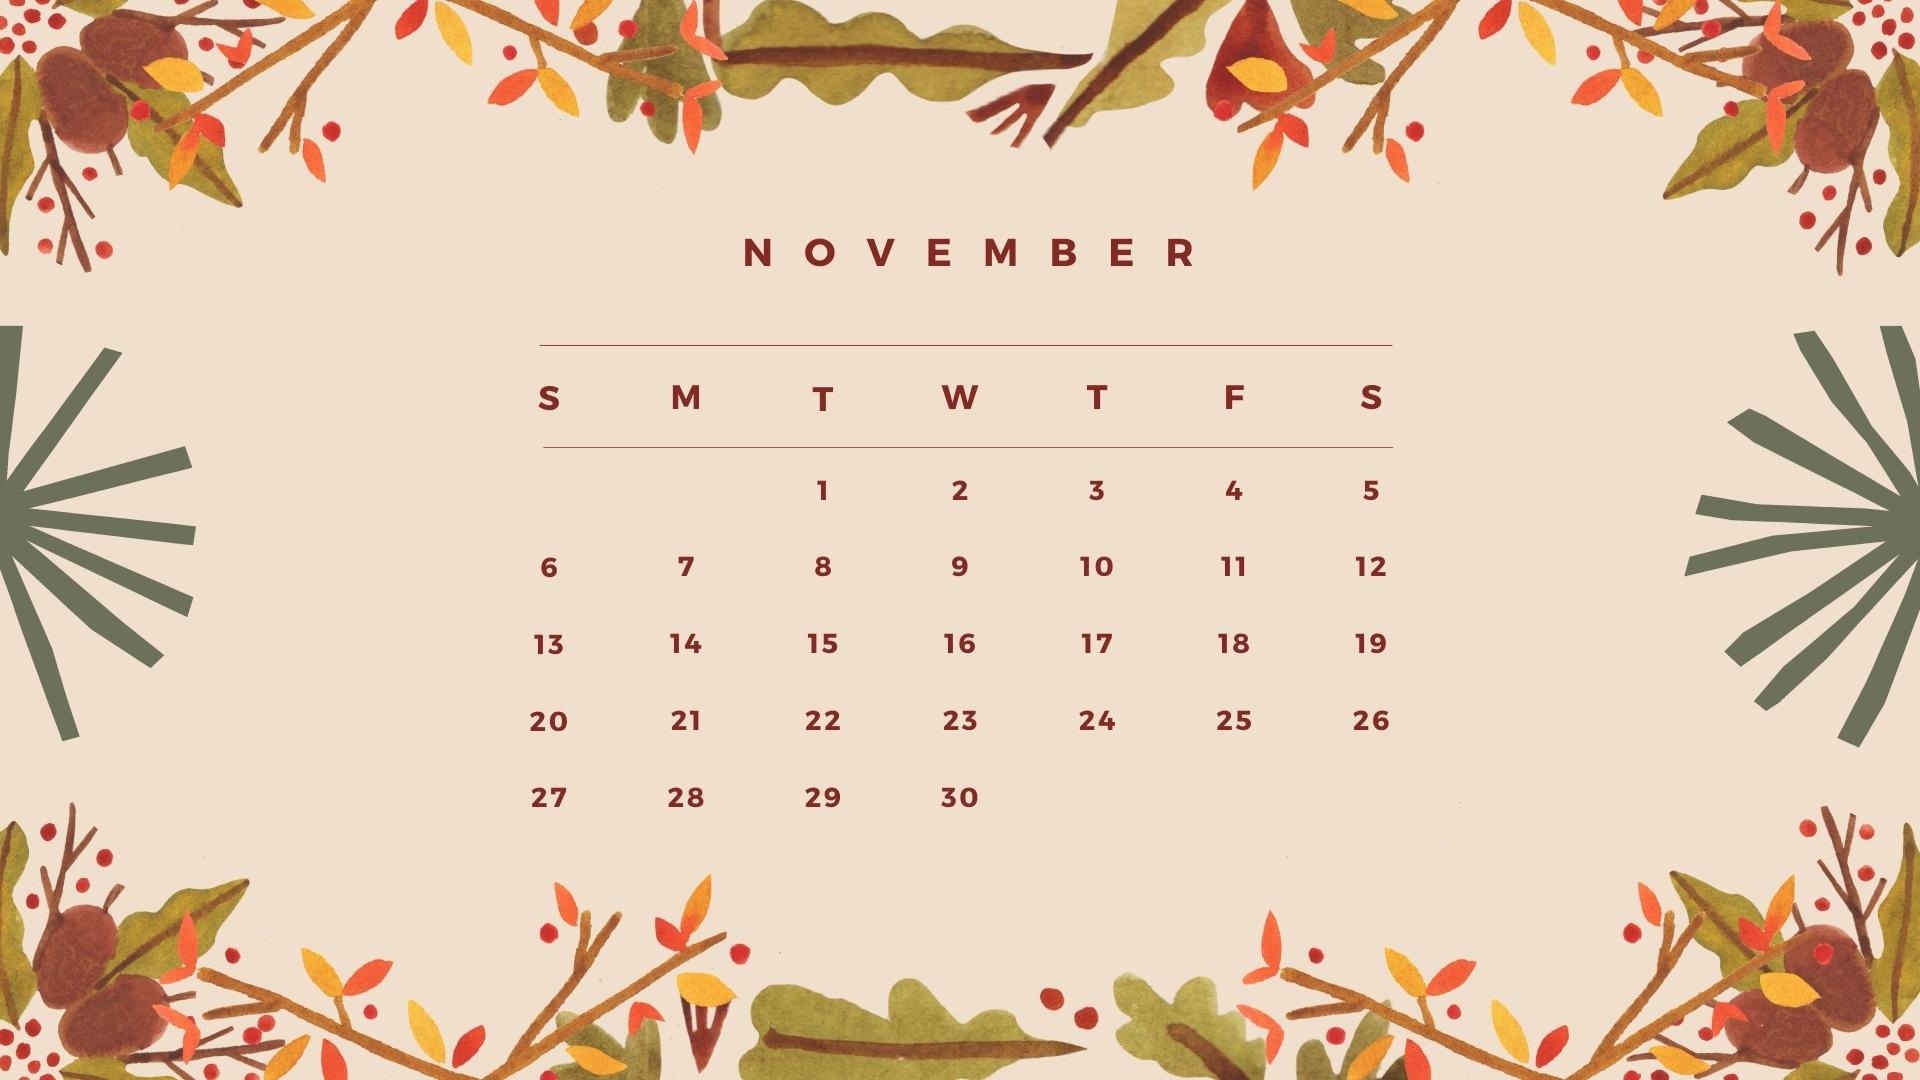 november 2022 calendar wallpaper images